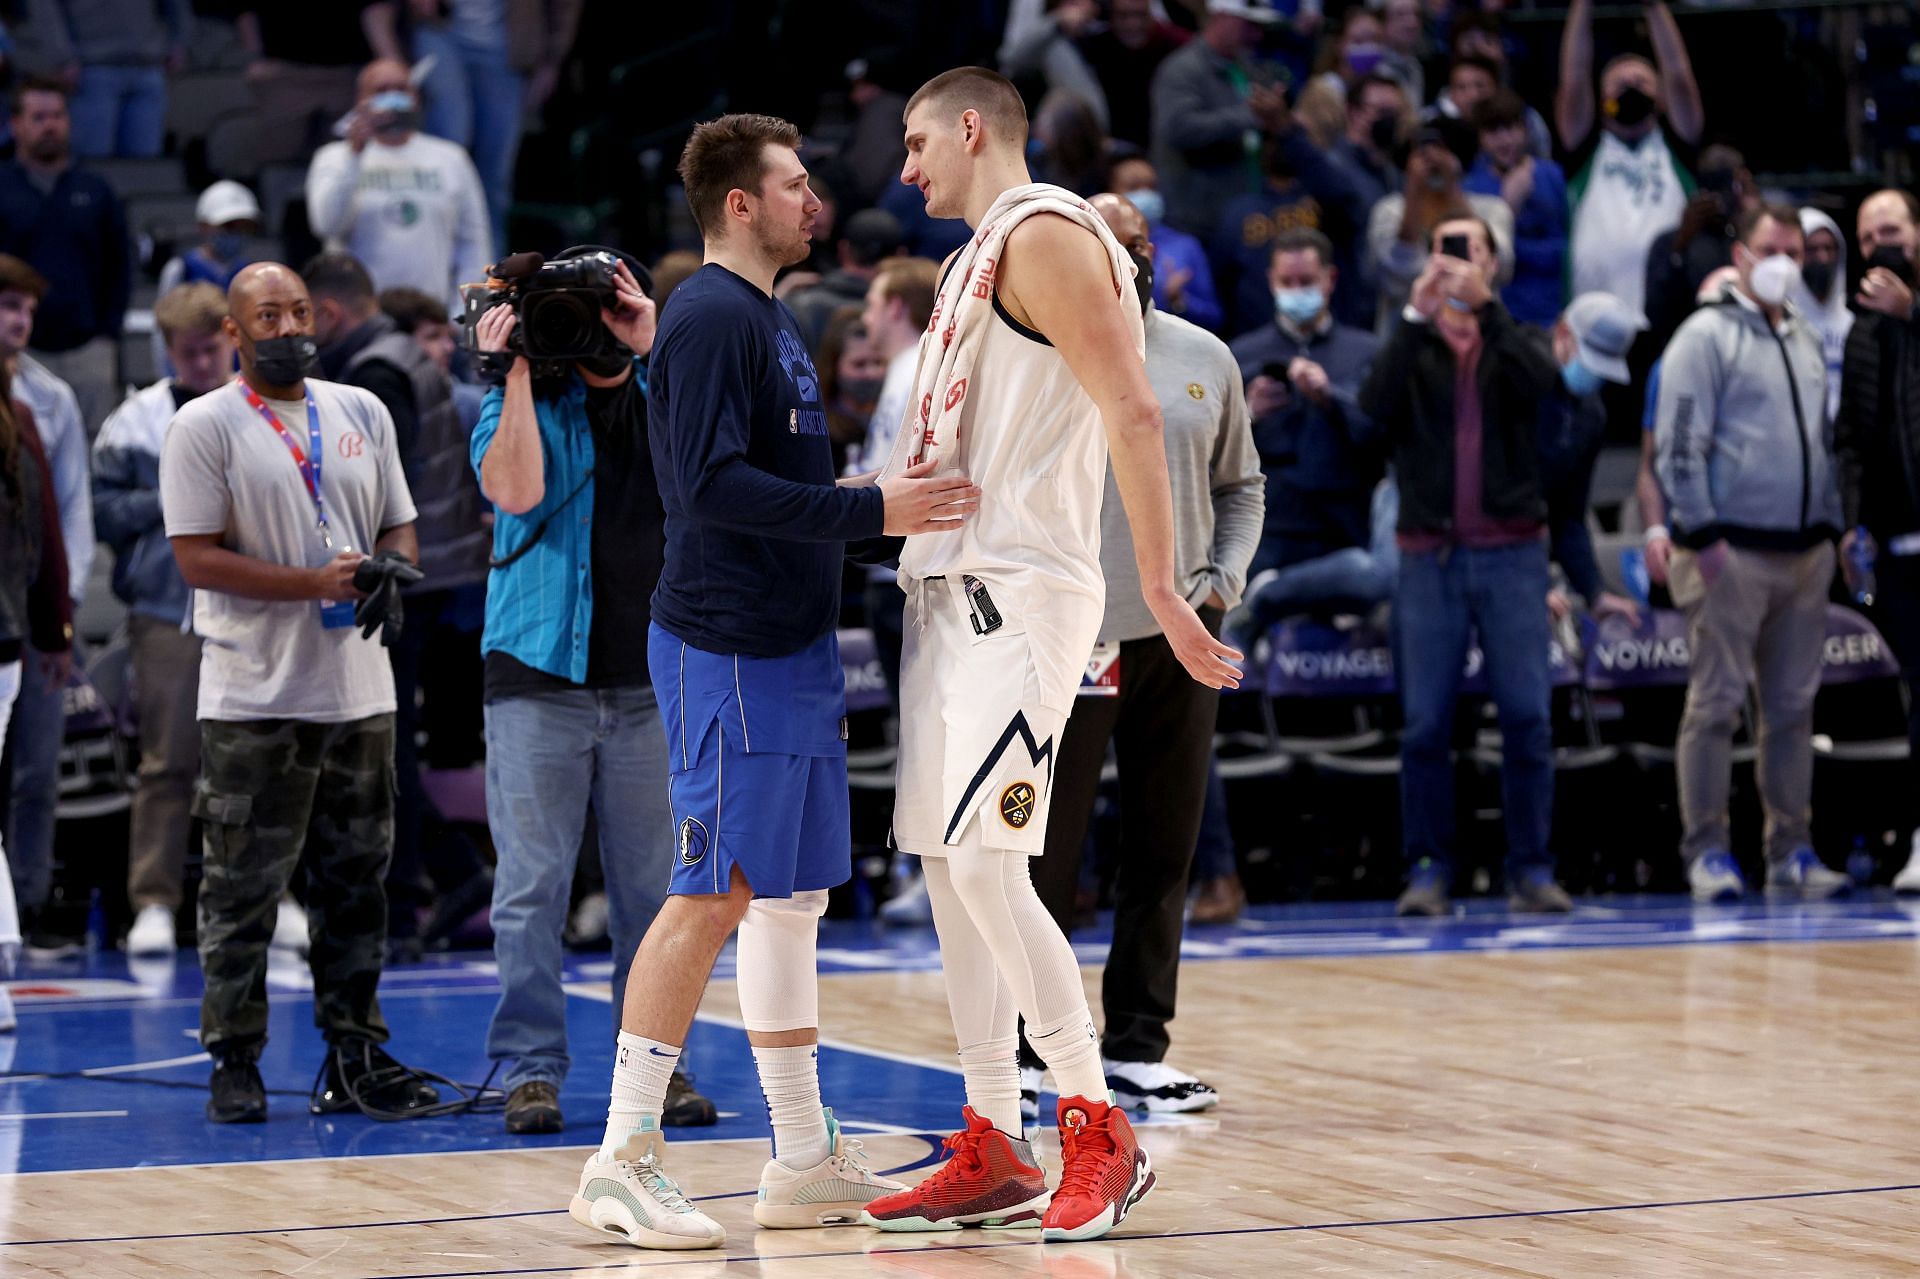 NBA stars Luka Doncic and Nikola Jokic